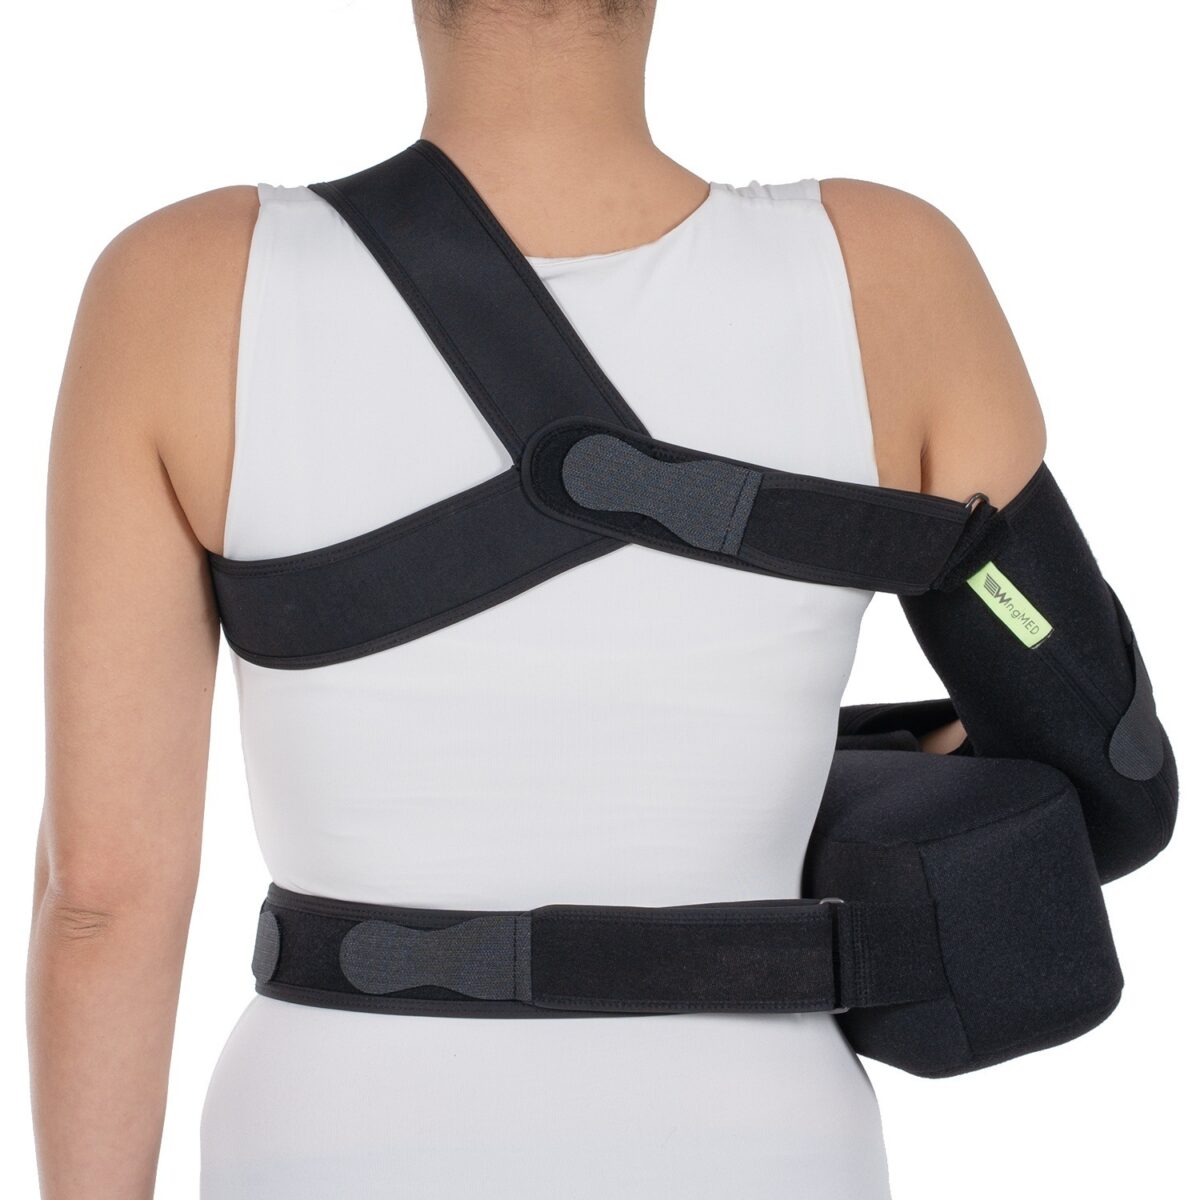 wingmed orthopedic equipments W212 arm sling 30 degrees 6